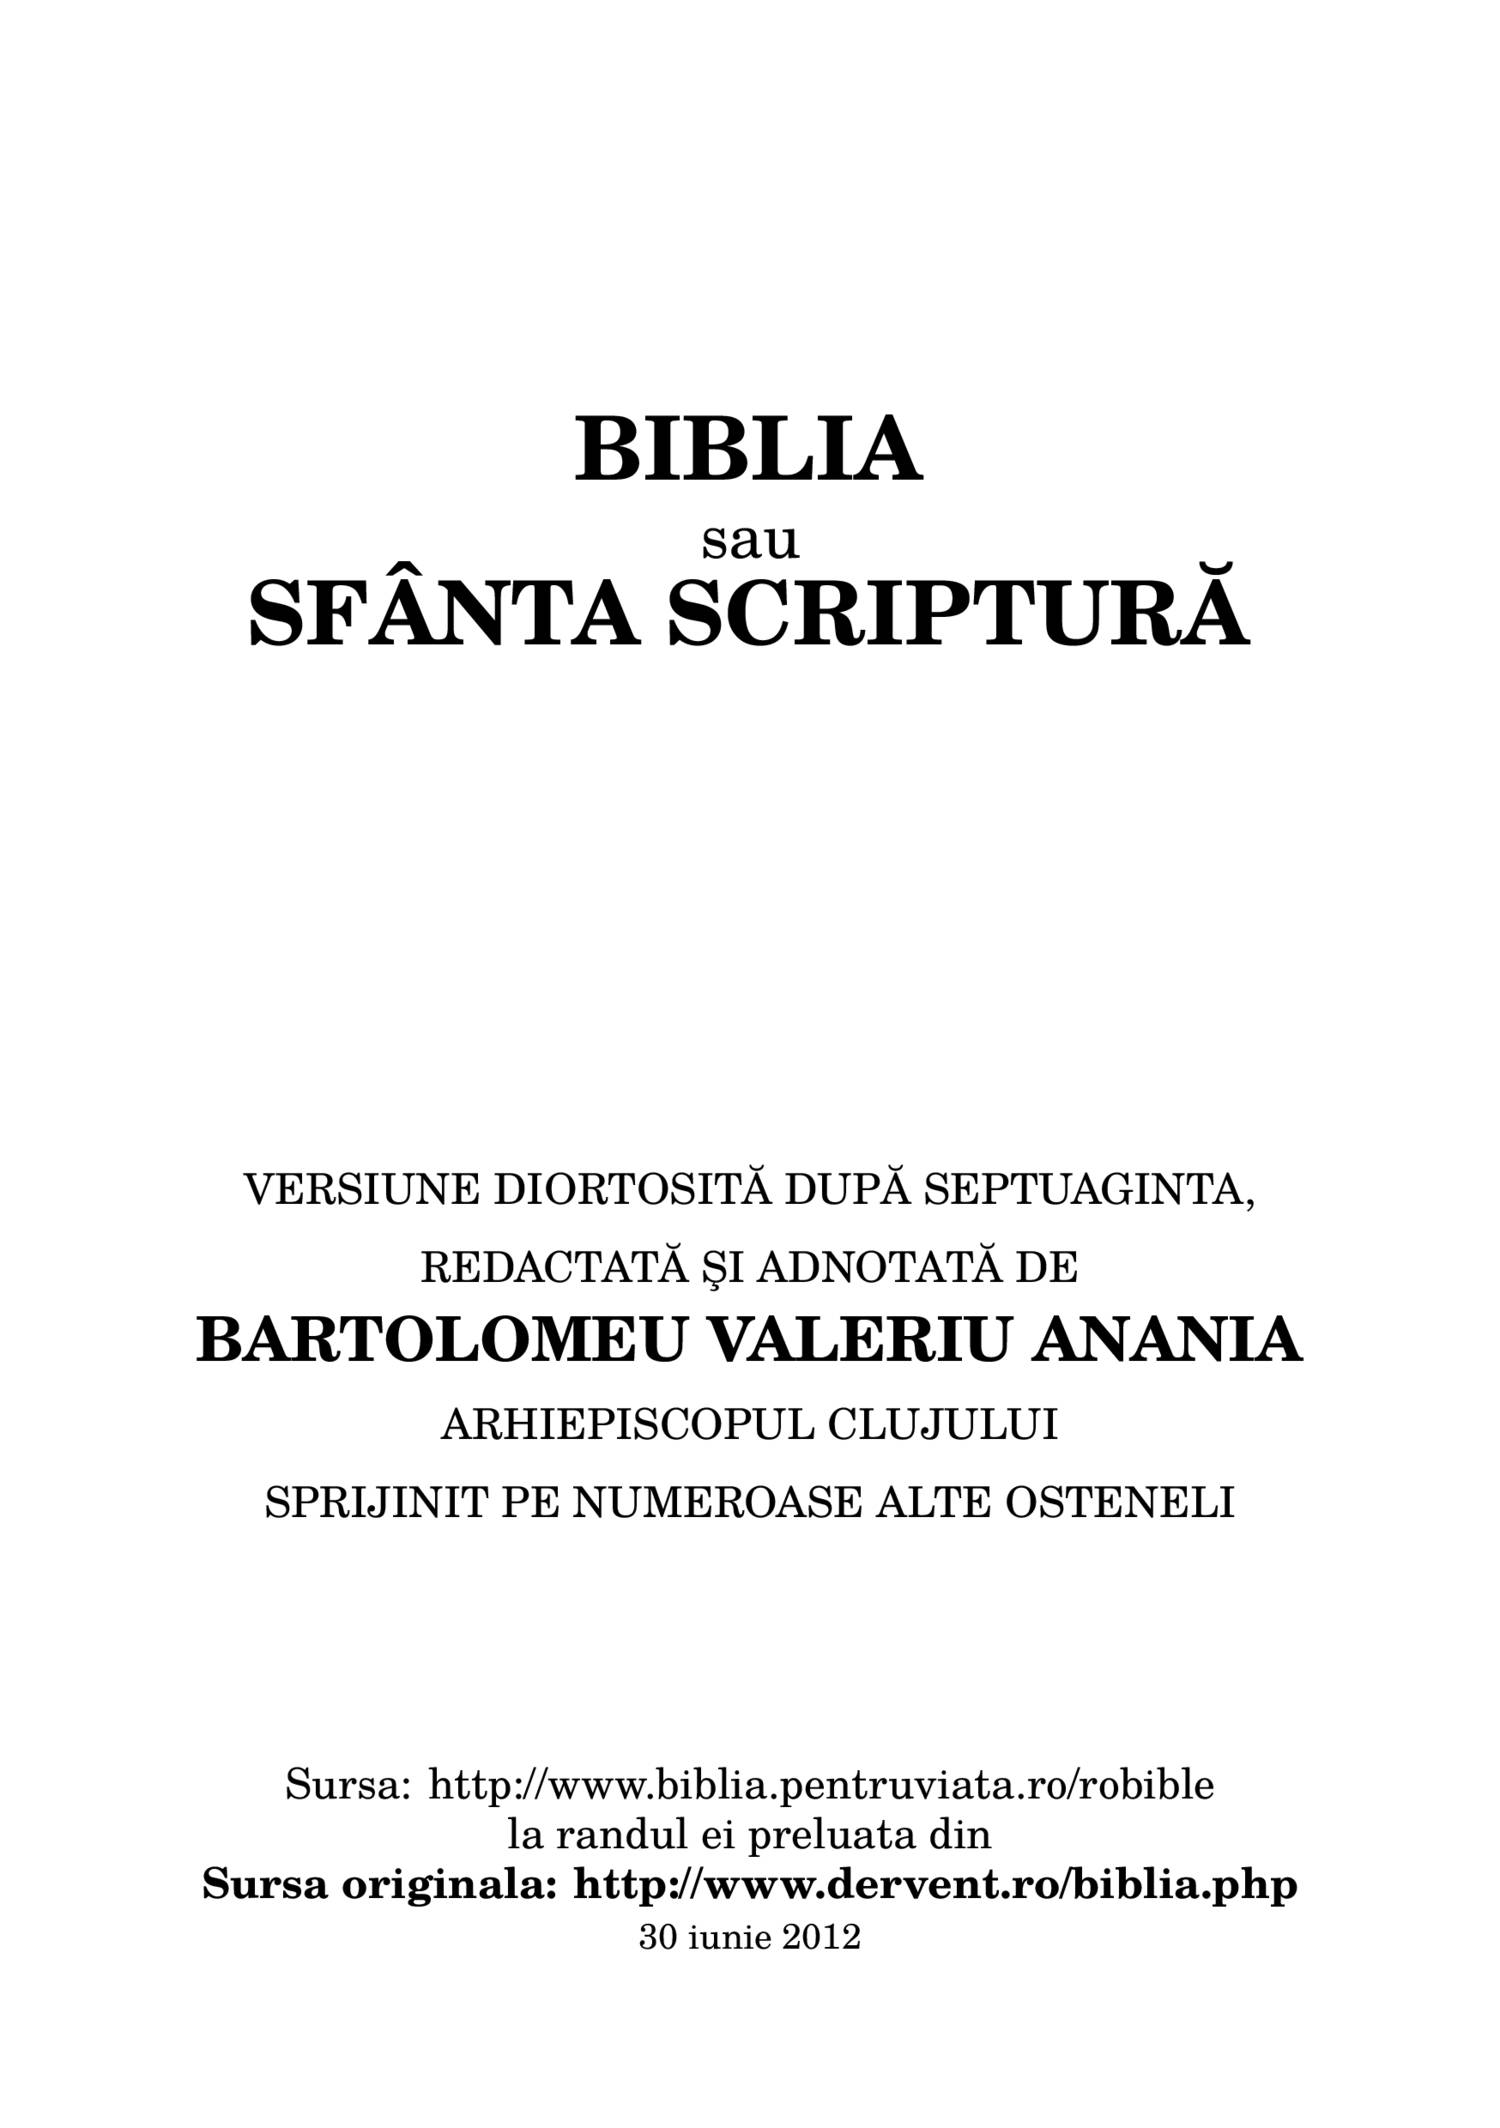 Noul testament crestin ortodox pdf